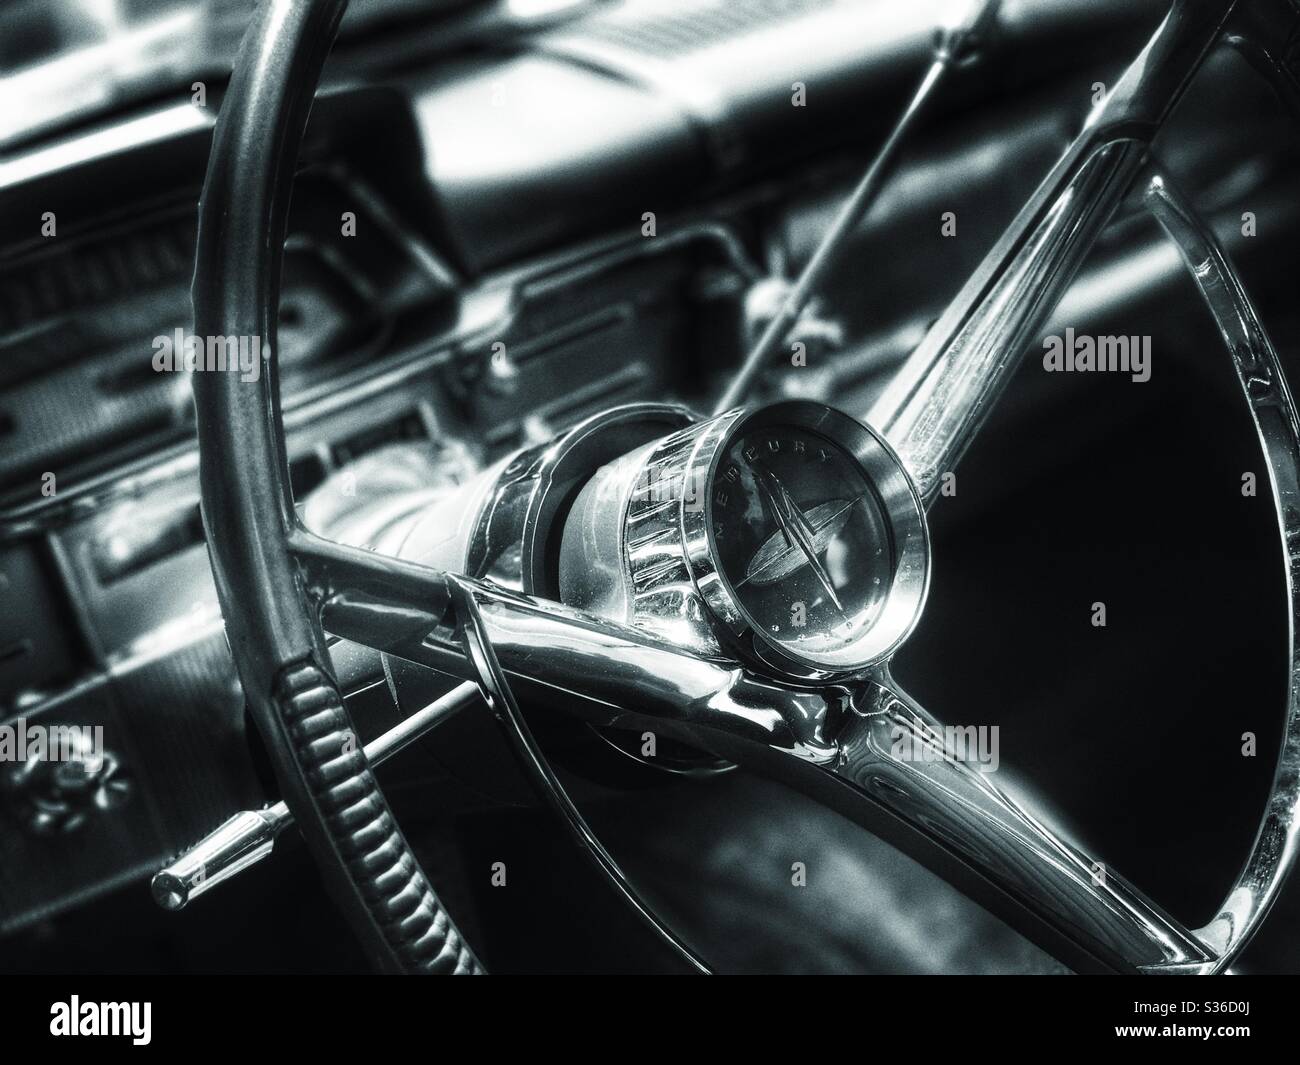 Vintage Mercury automobile steering wheel in black and white Stock Photo